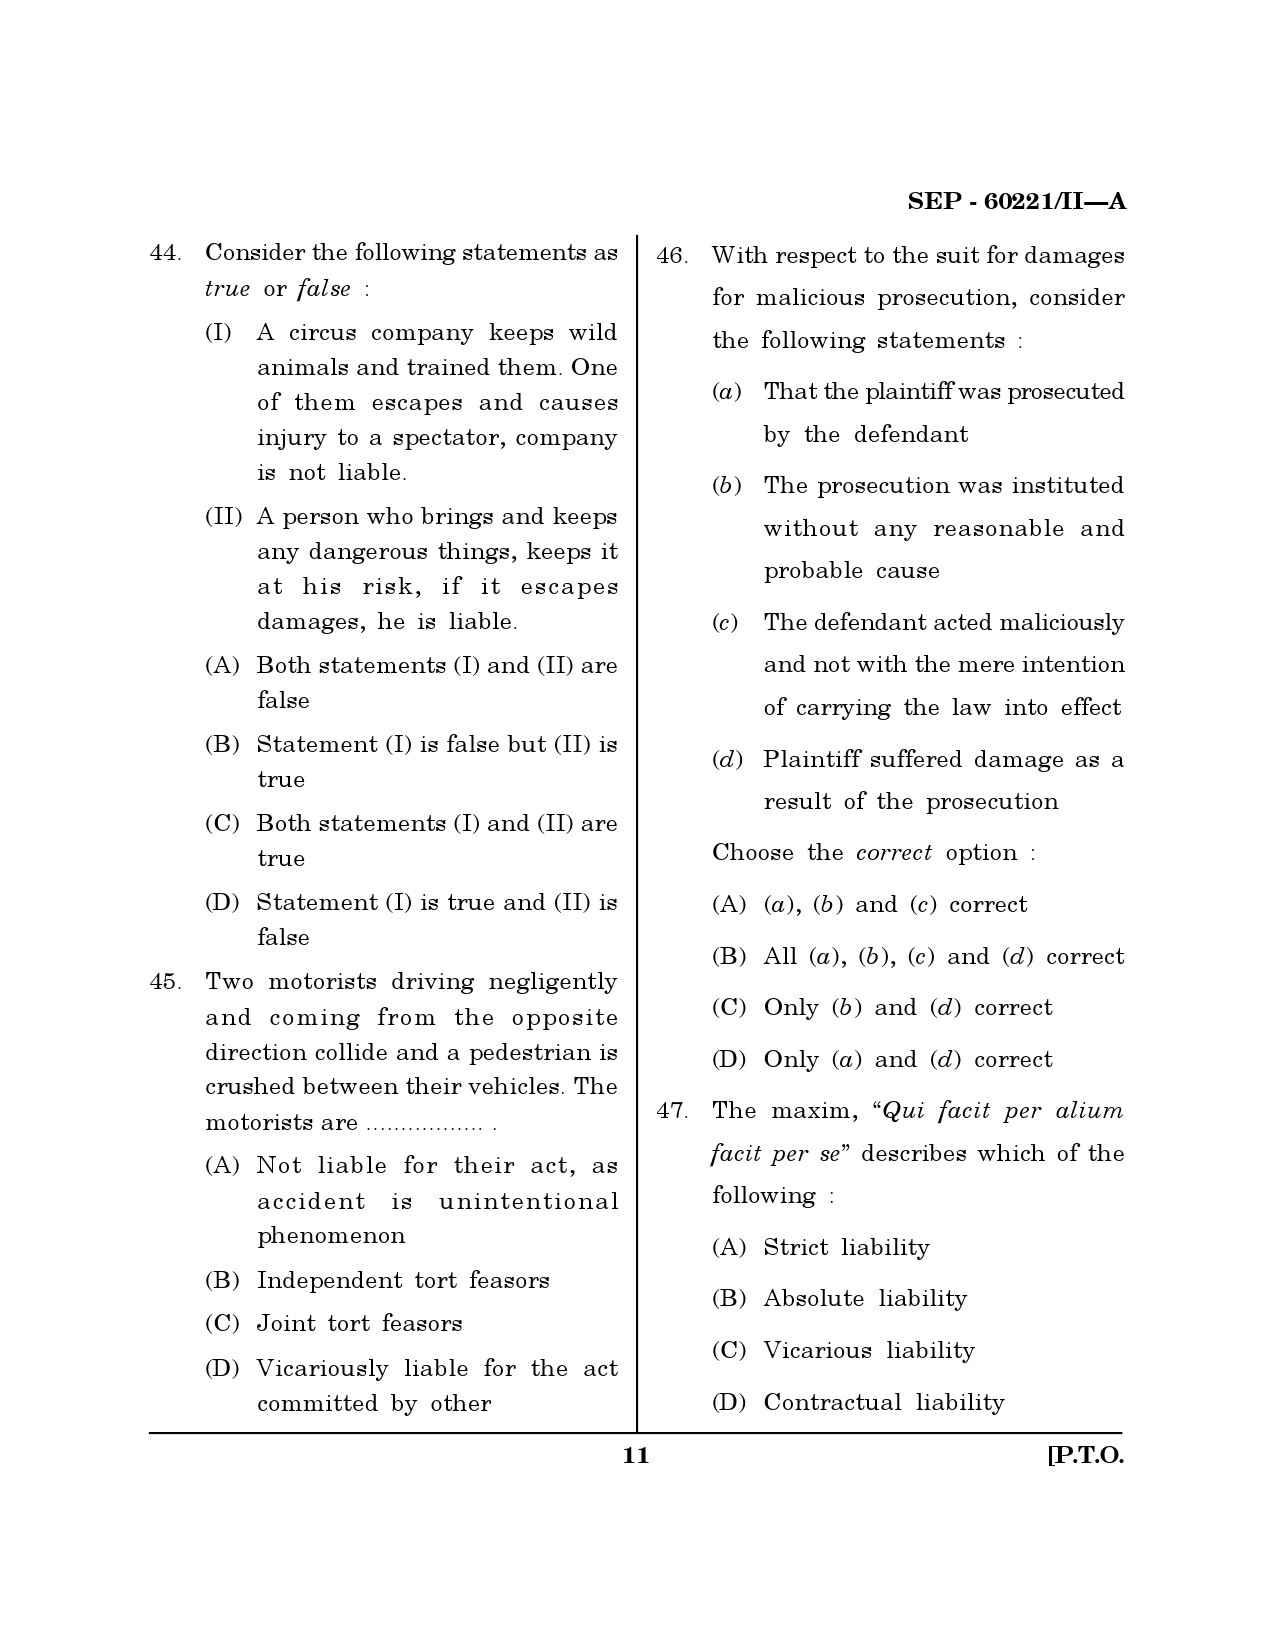 Maharashtra SET Law Exam Question Paper September 2021 10